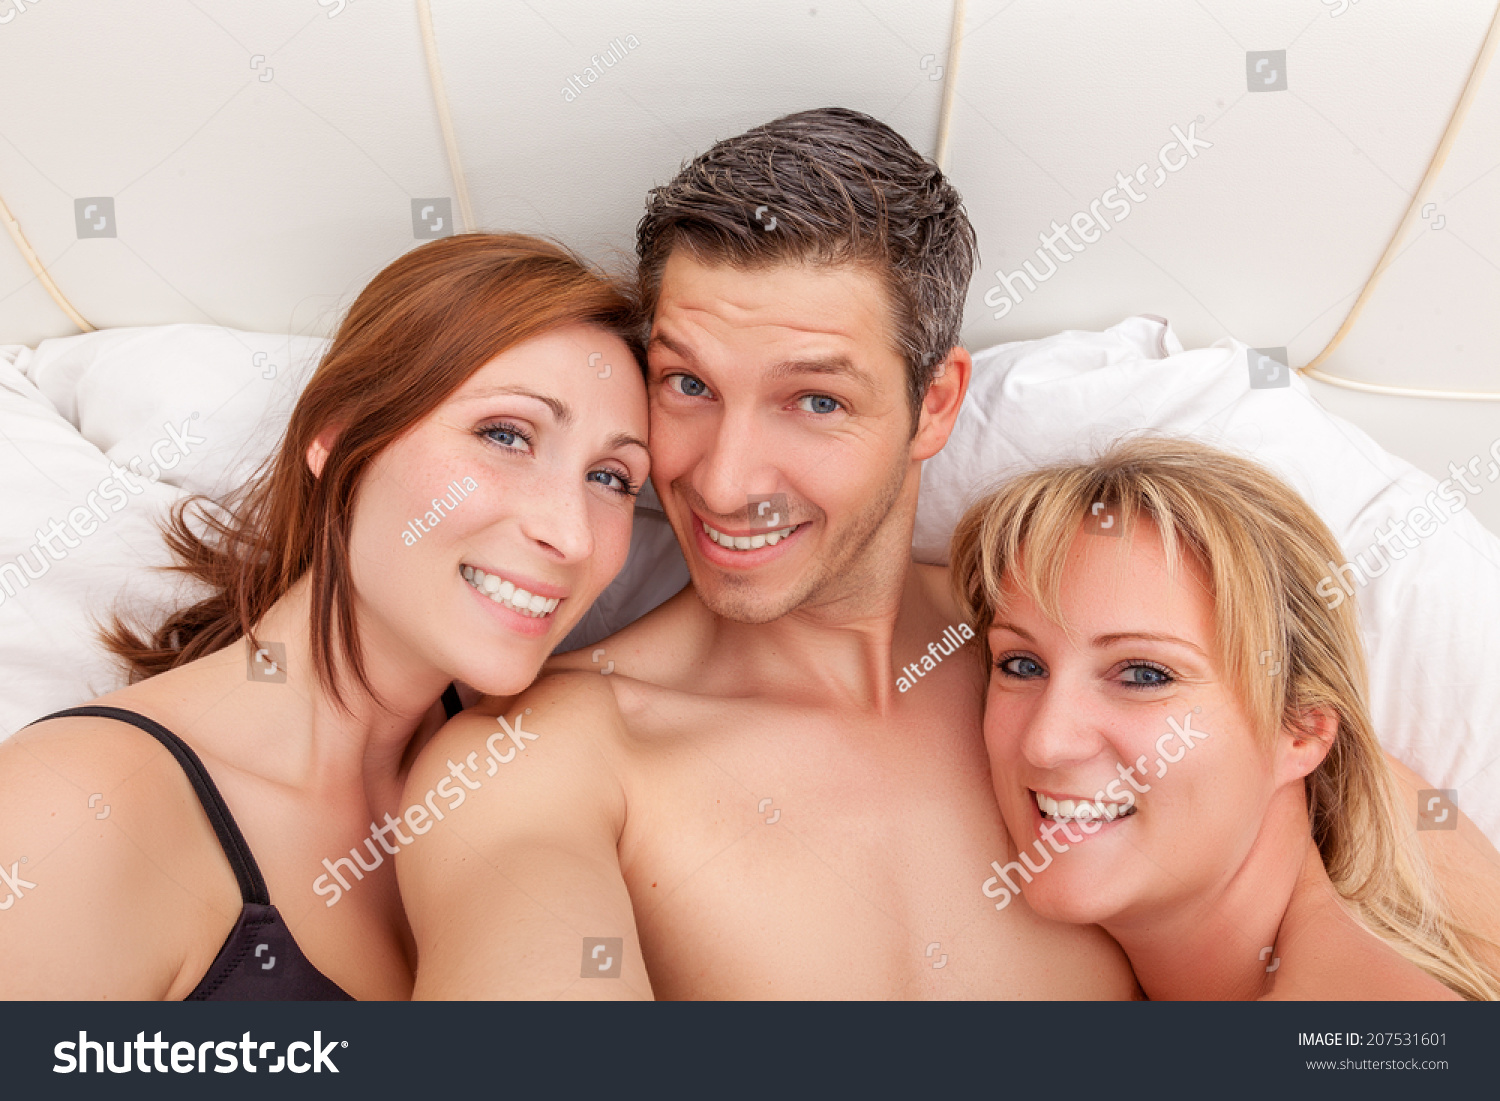 Threesome ex husband